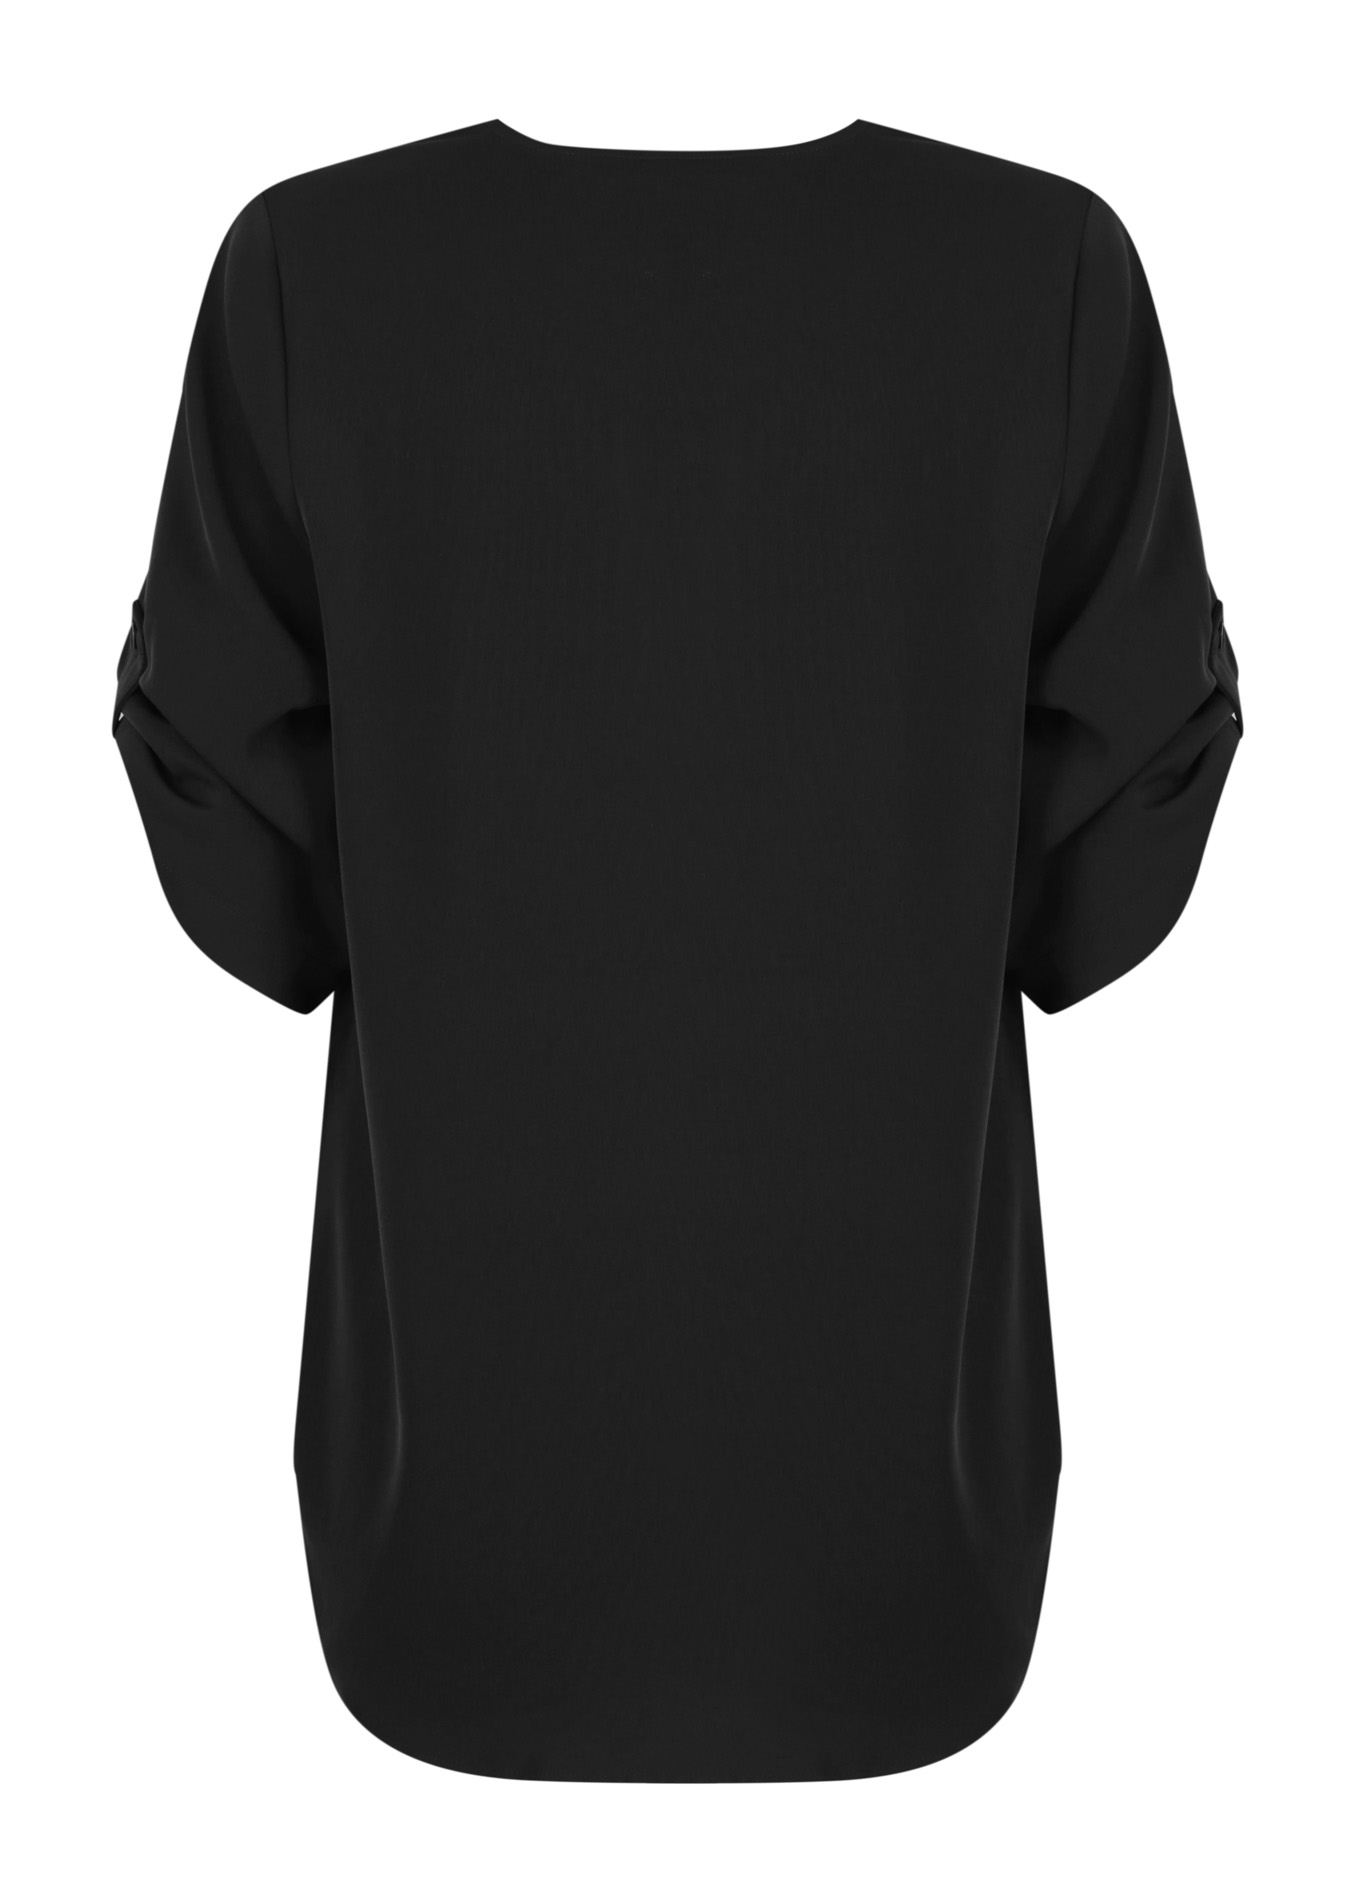 Reece Half Sleeve V-Neck Top - Black - Uniform Edit